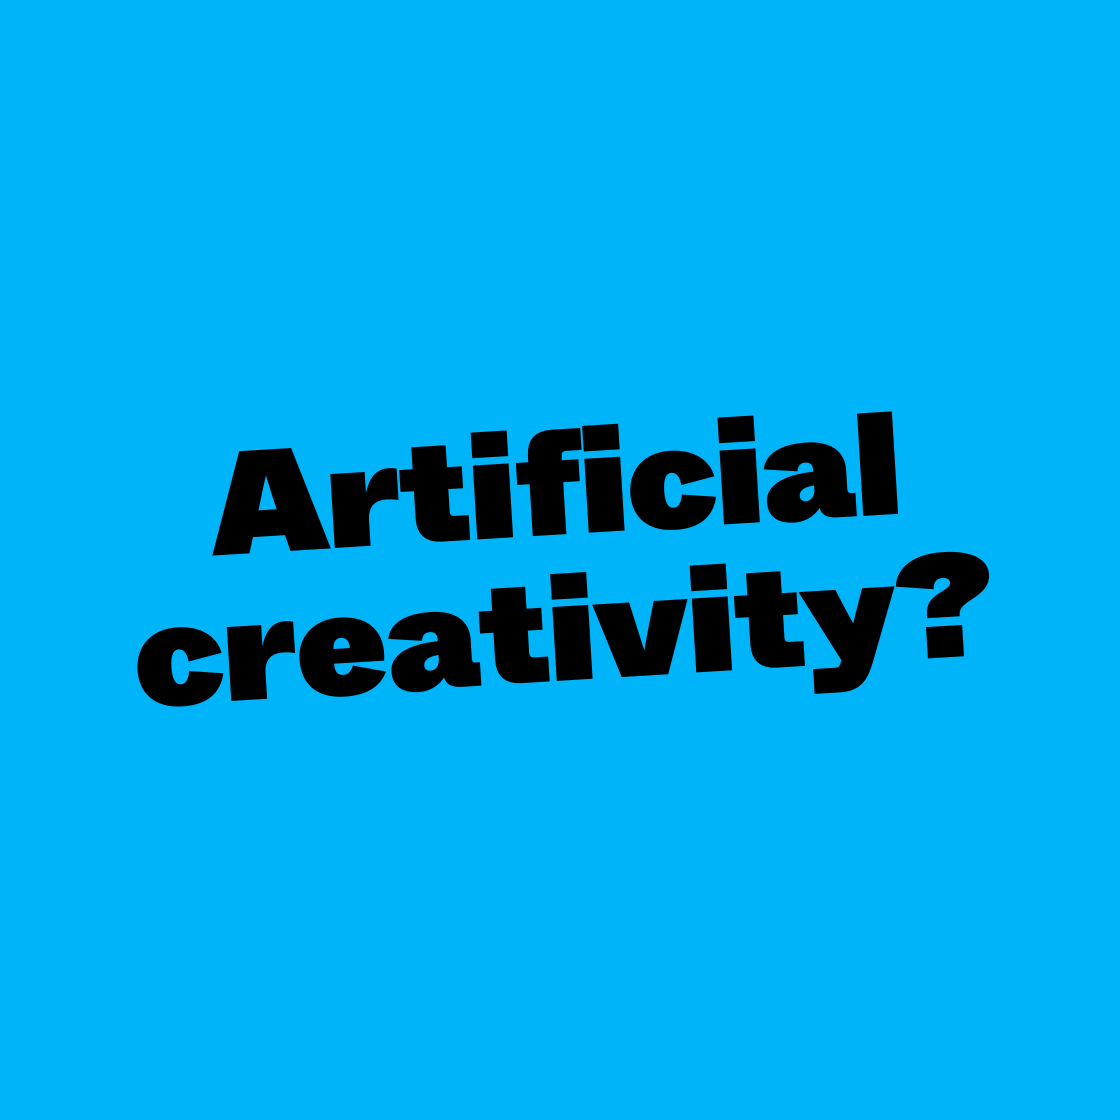 Artificial creativity?